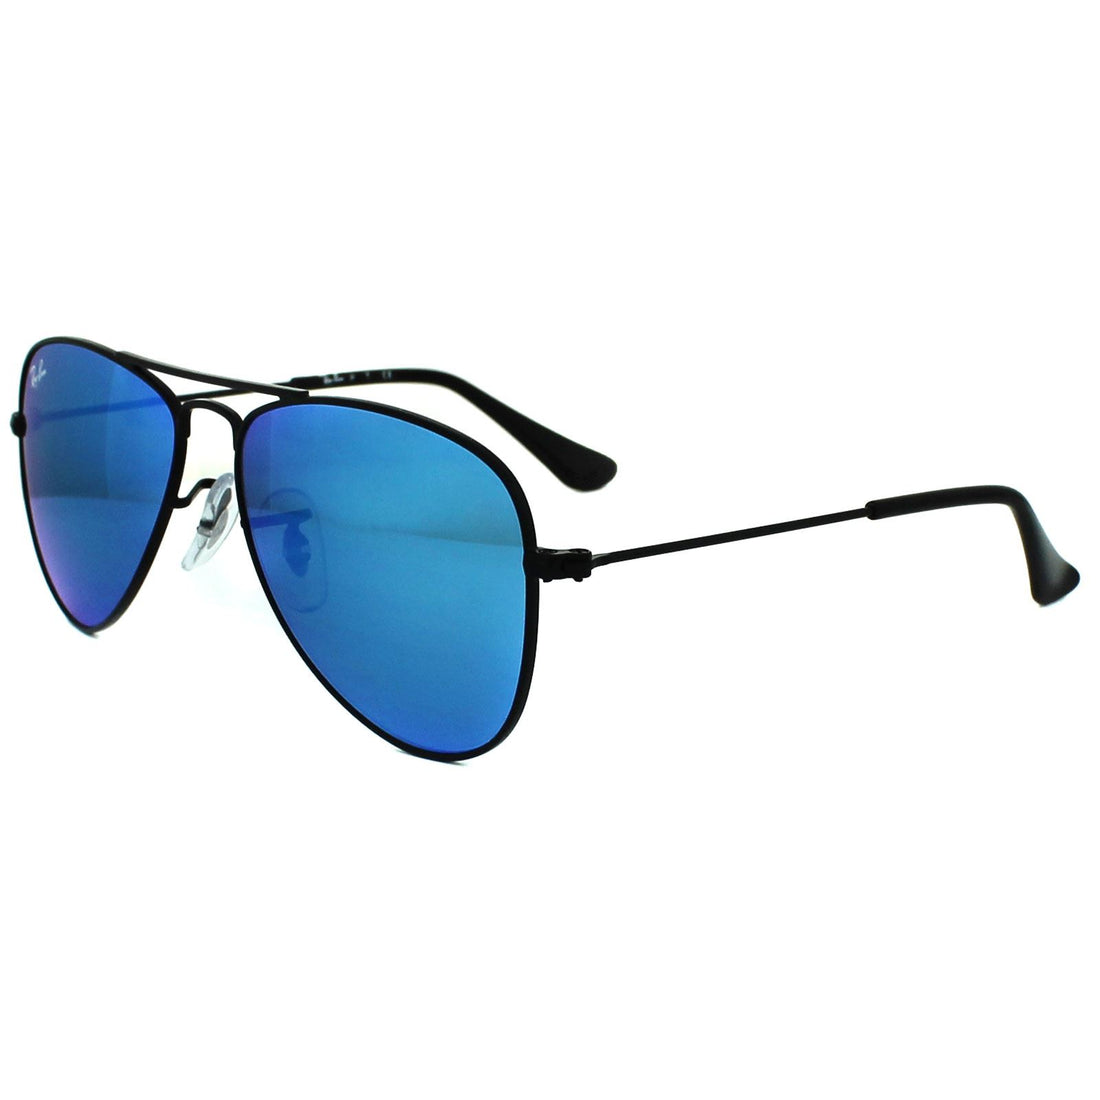 Ray-Ban Junior Sunglasses 9506 201/55 Black Blue Flash Mirror